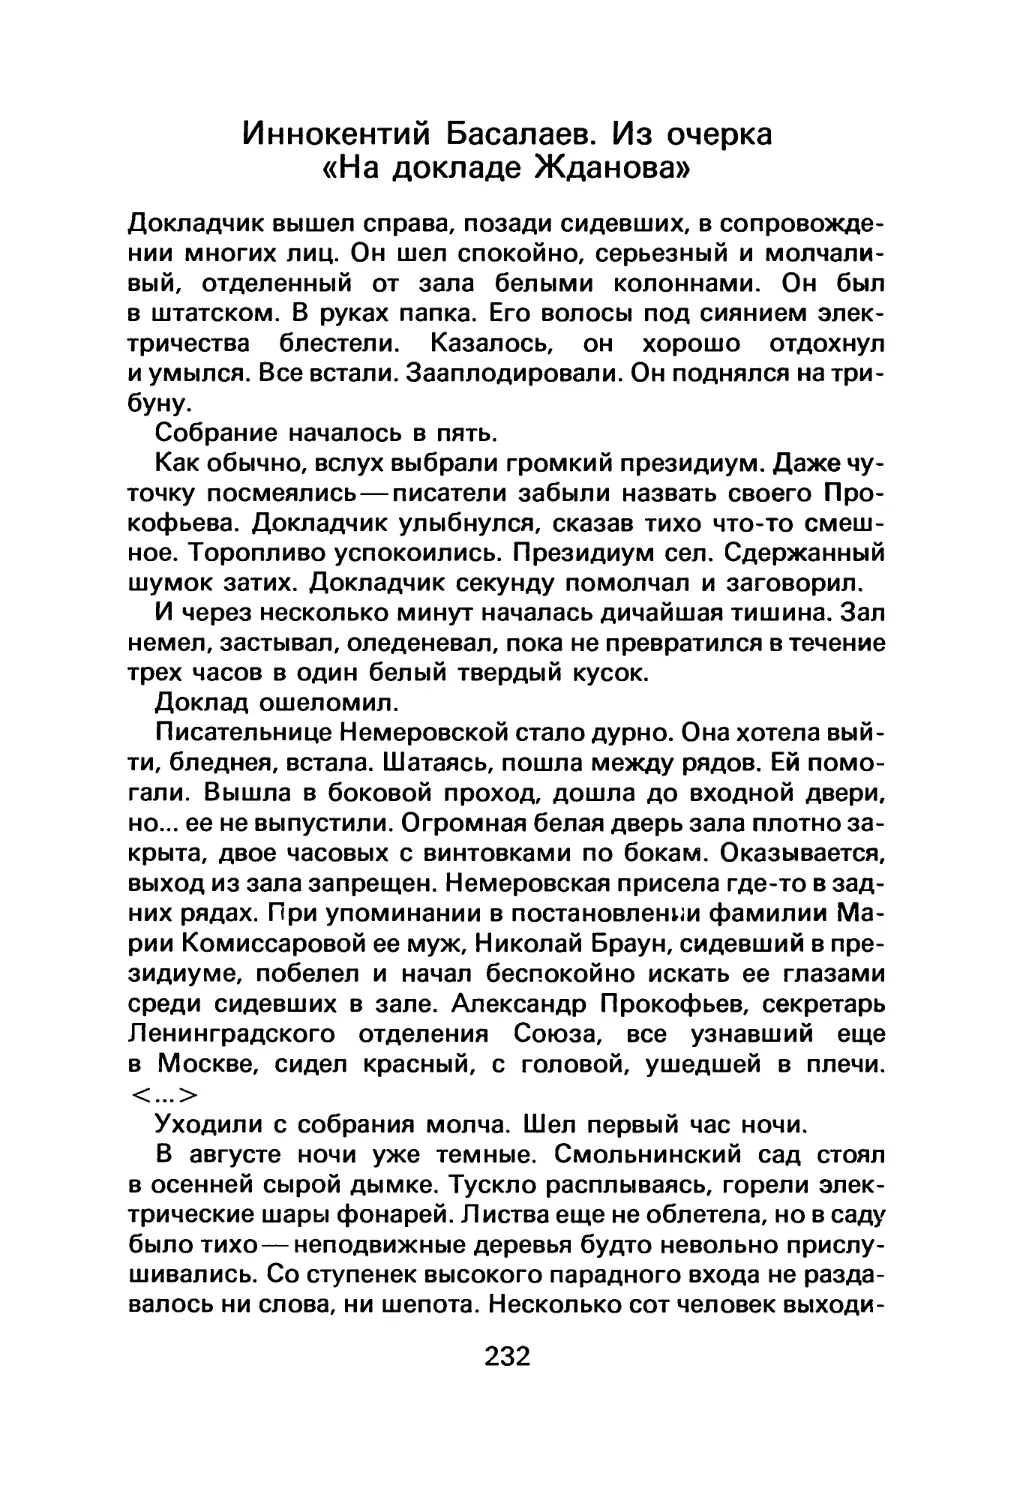 Иннокентий Басалаев. Из очерка «На докладе Жданова»